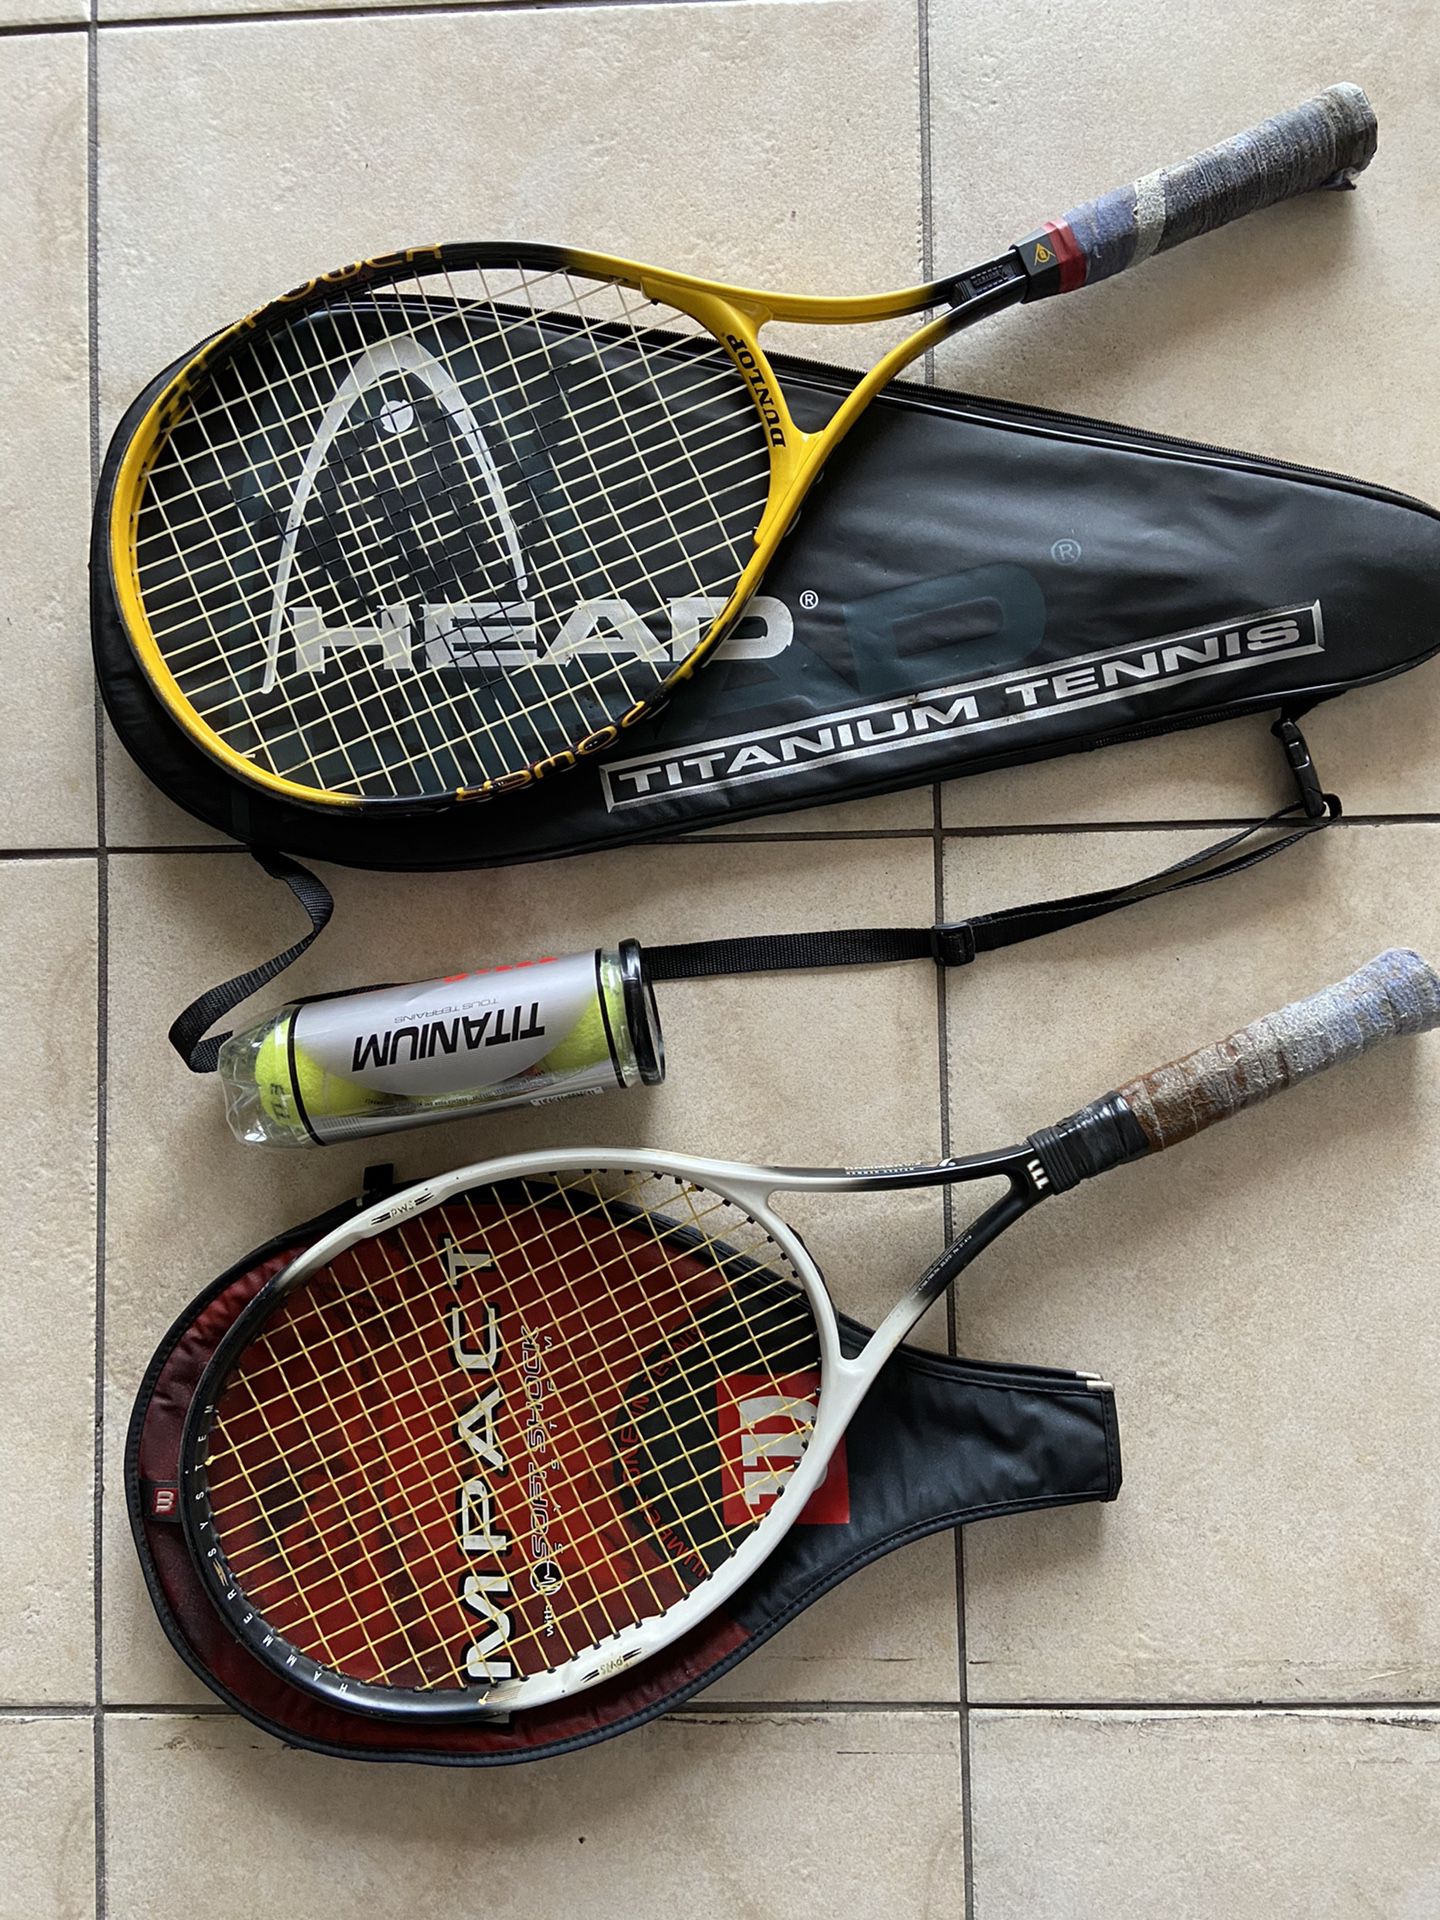 Tennis rackets plus